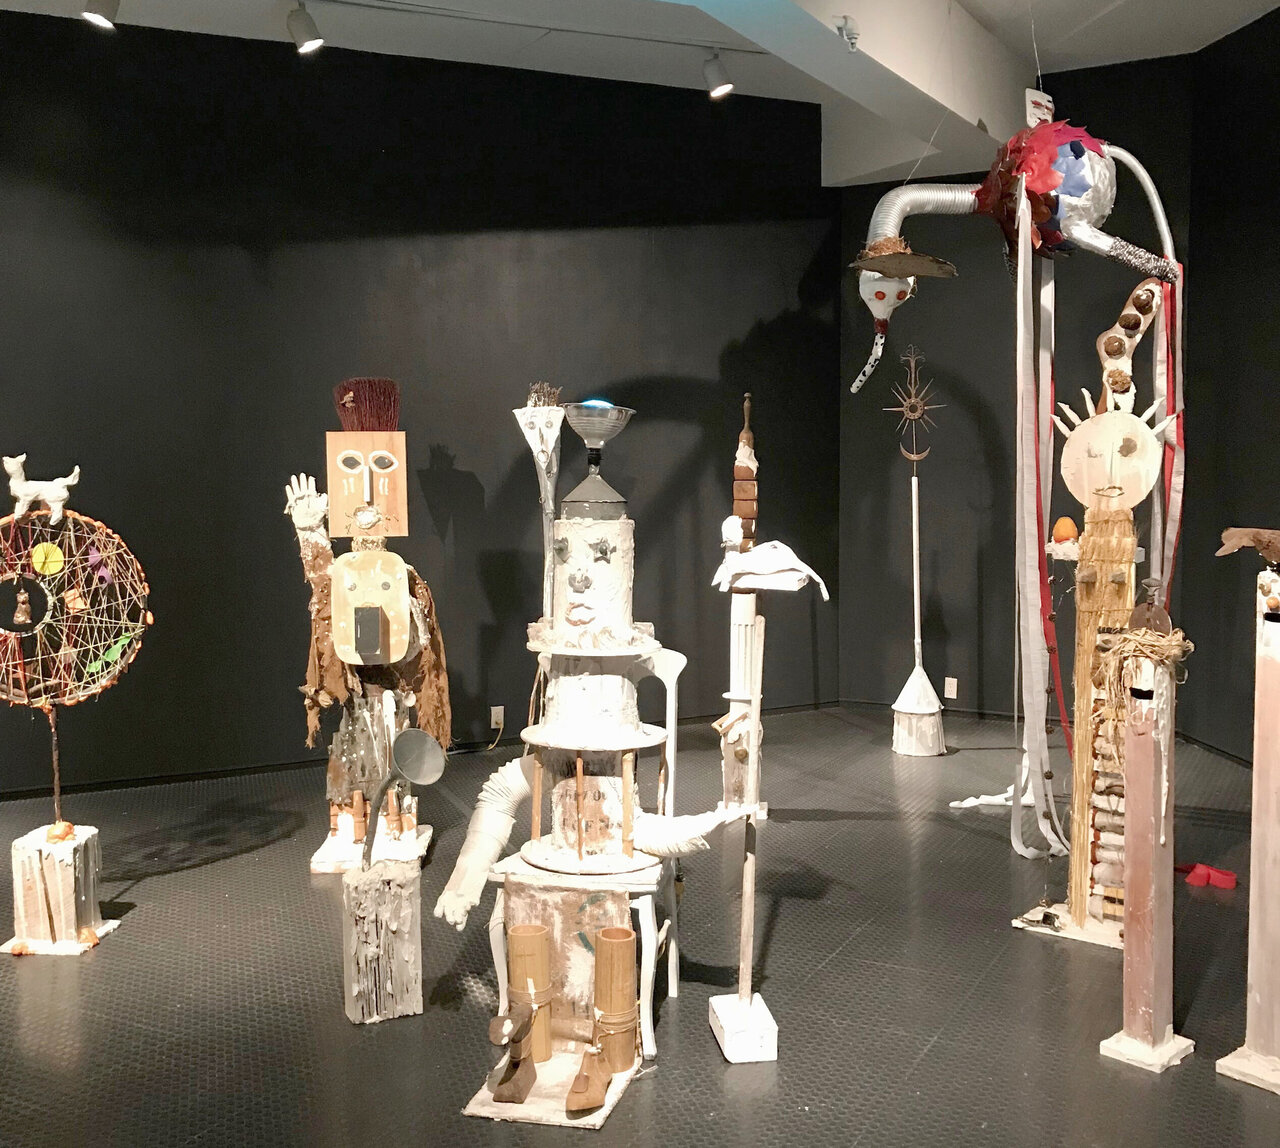 Sculptures in a gallery room